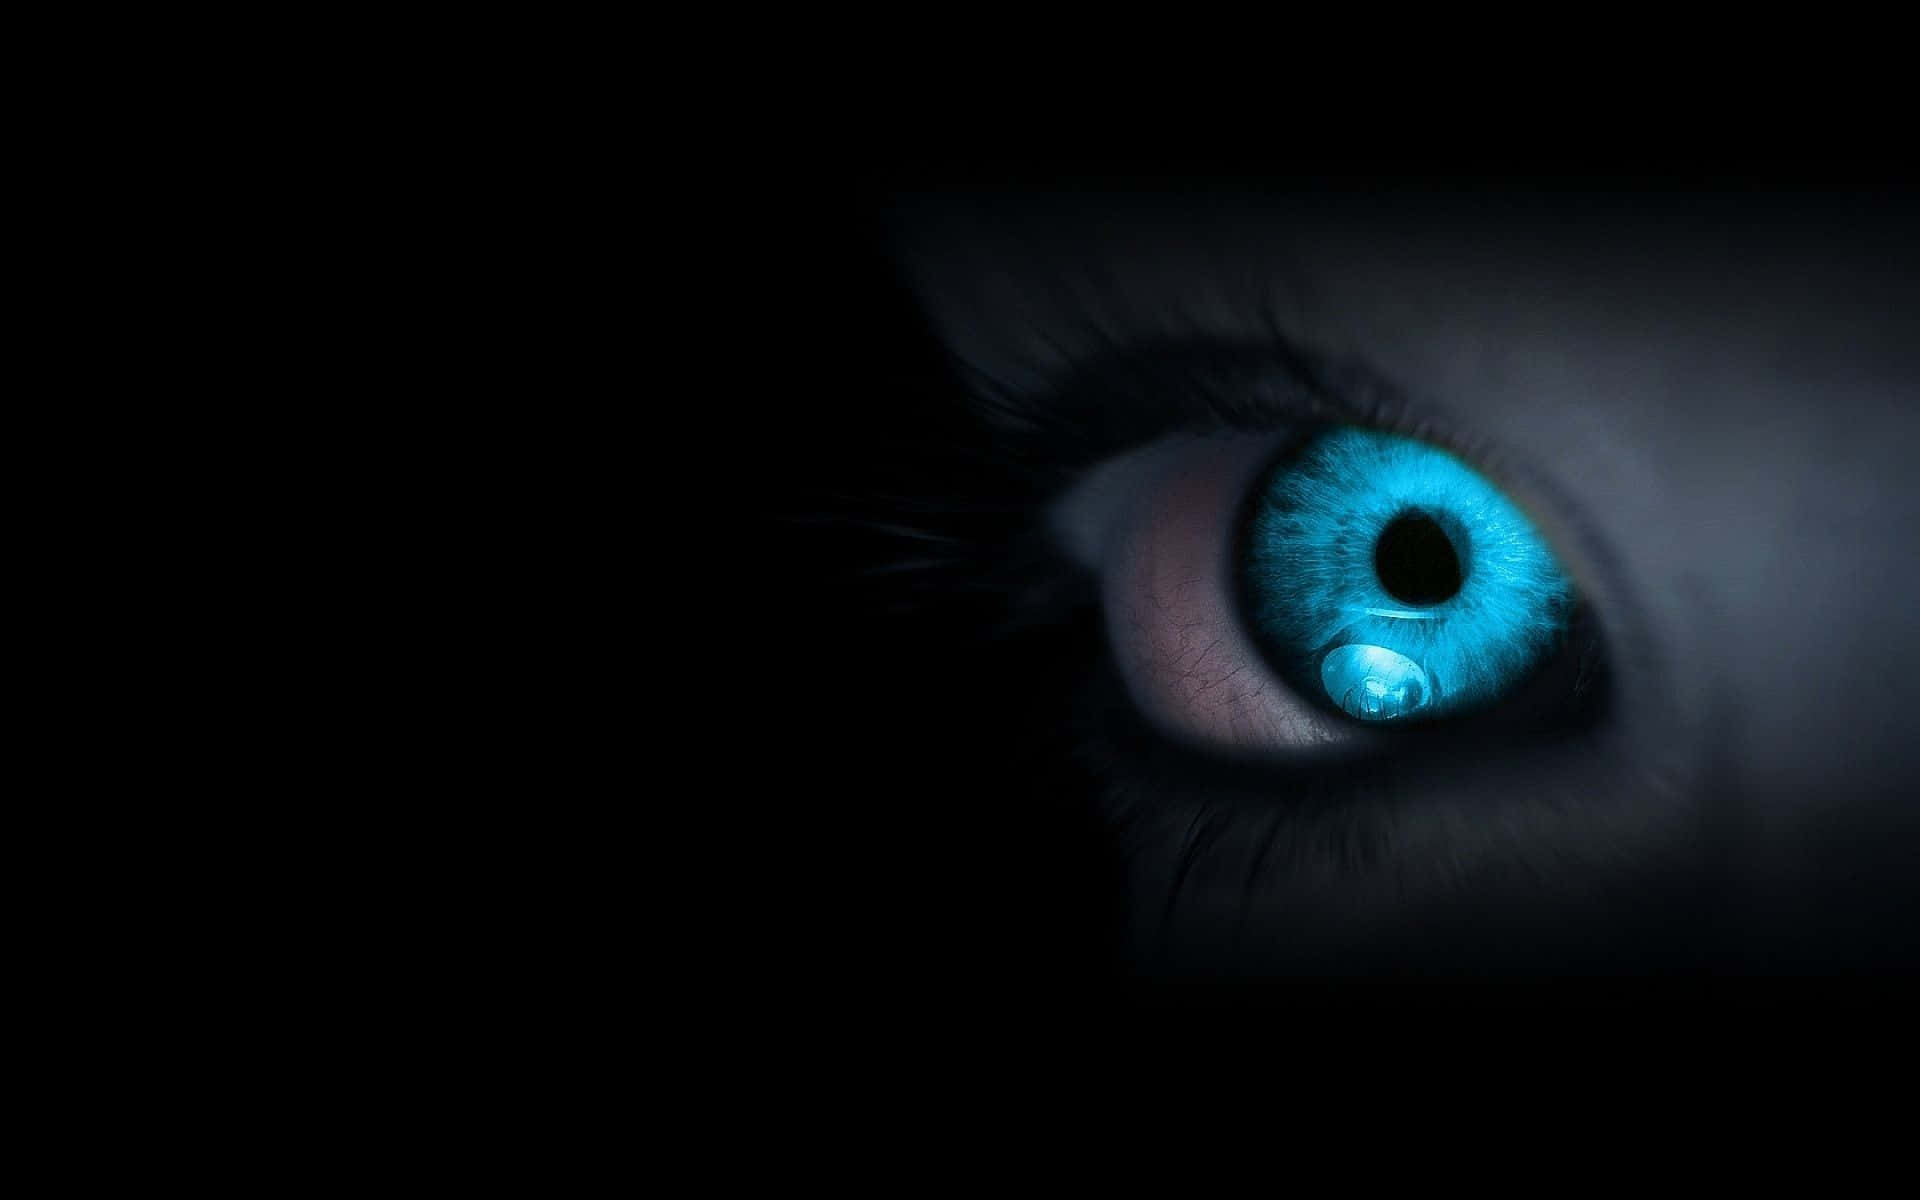 Intense Gaze - Piercing Blue Eyes Close-Up